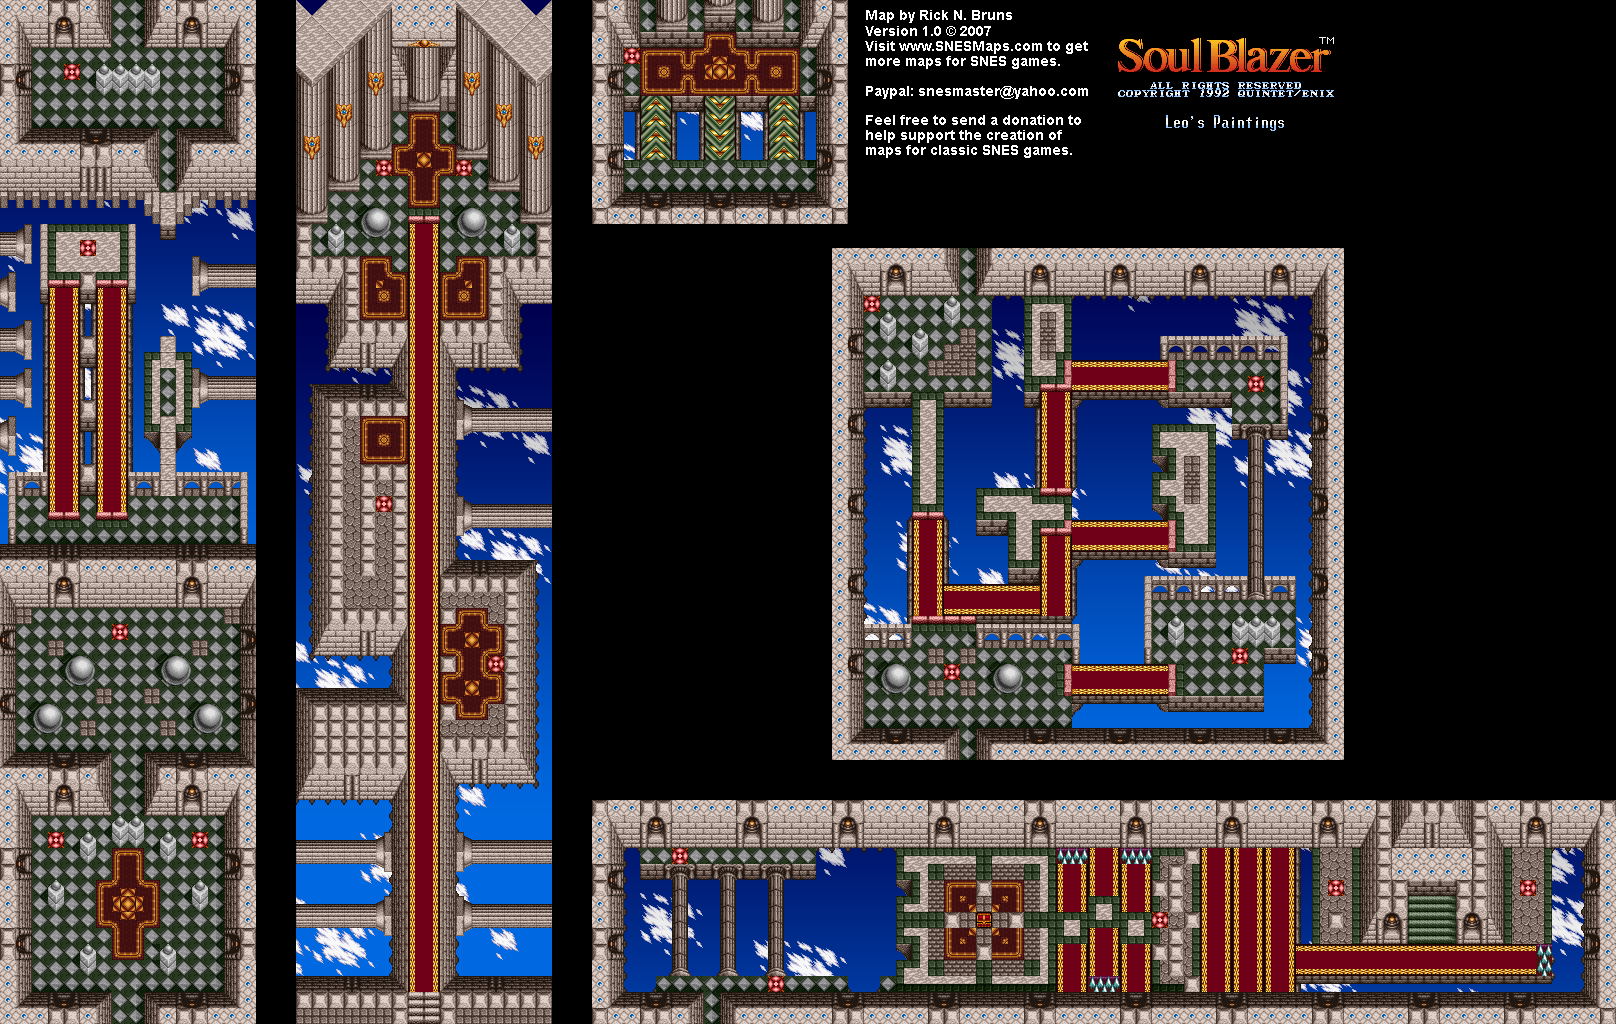 Soul Blazer - Leo's Paintings (Before) Map - SNES Super Nintendo